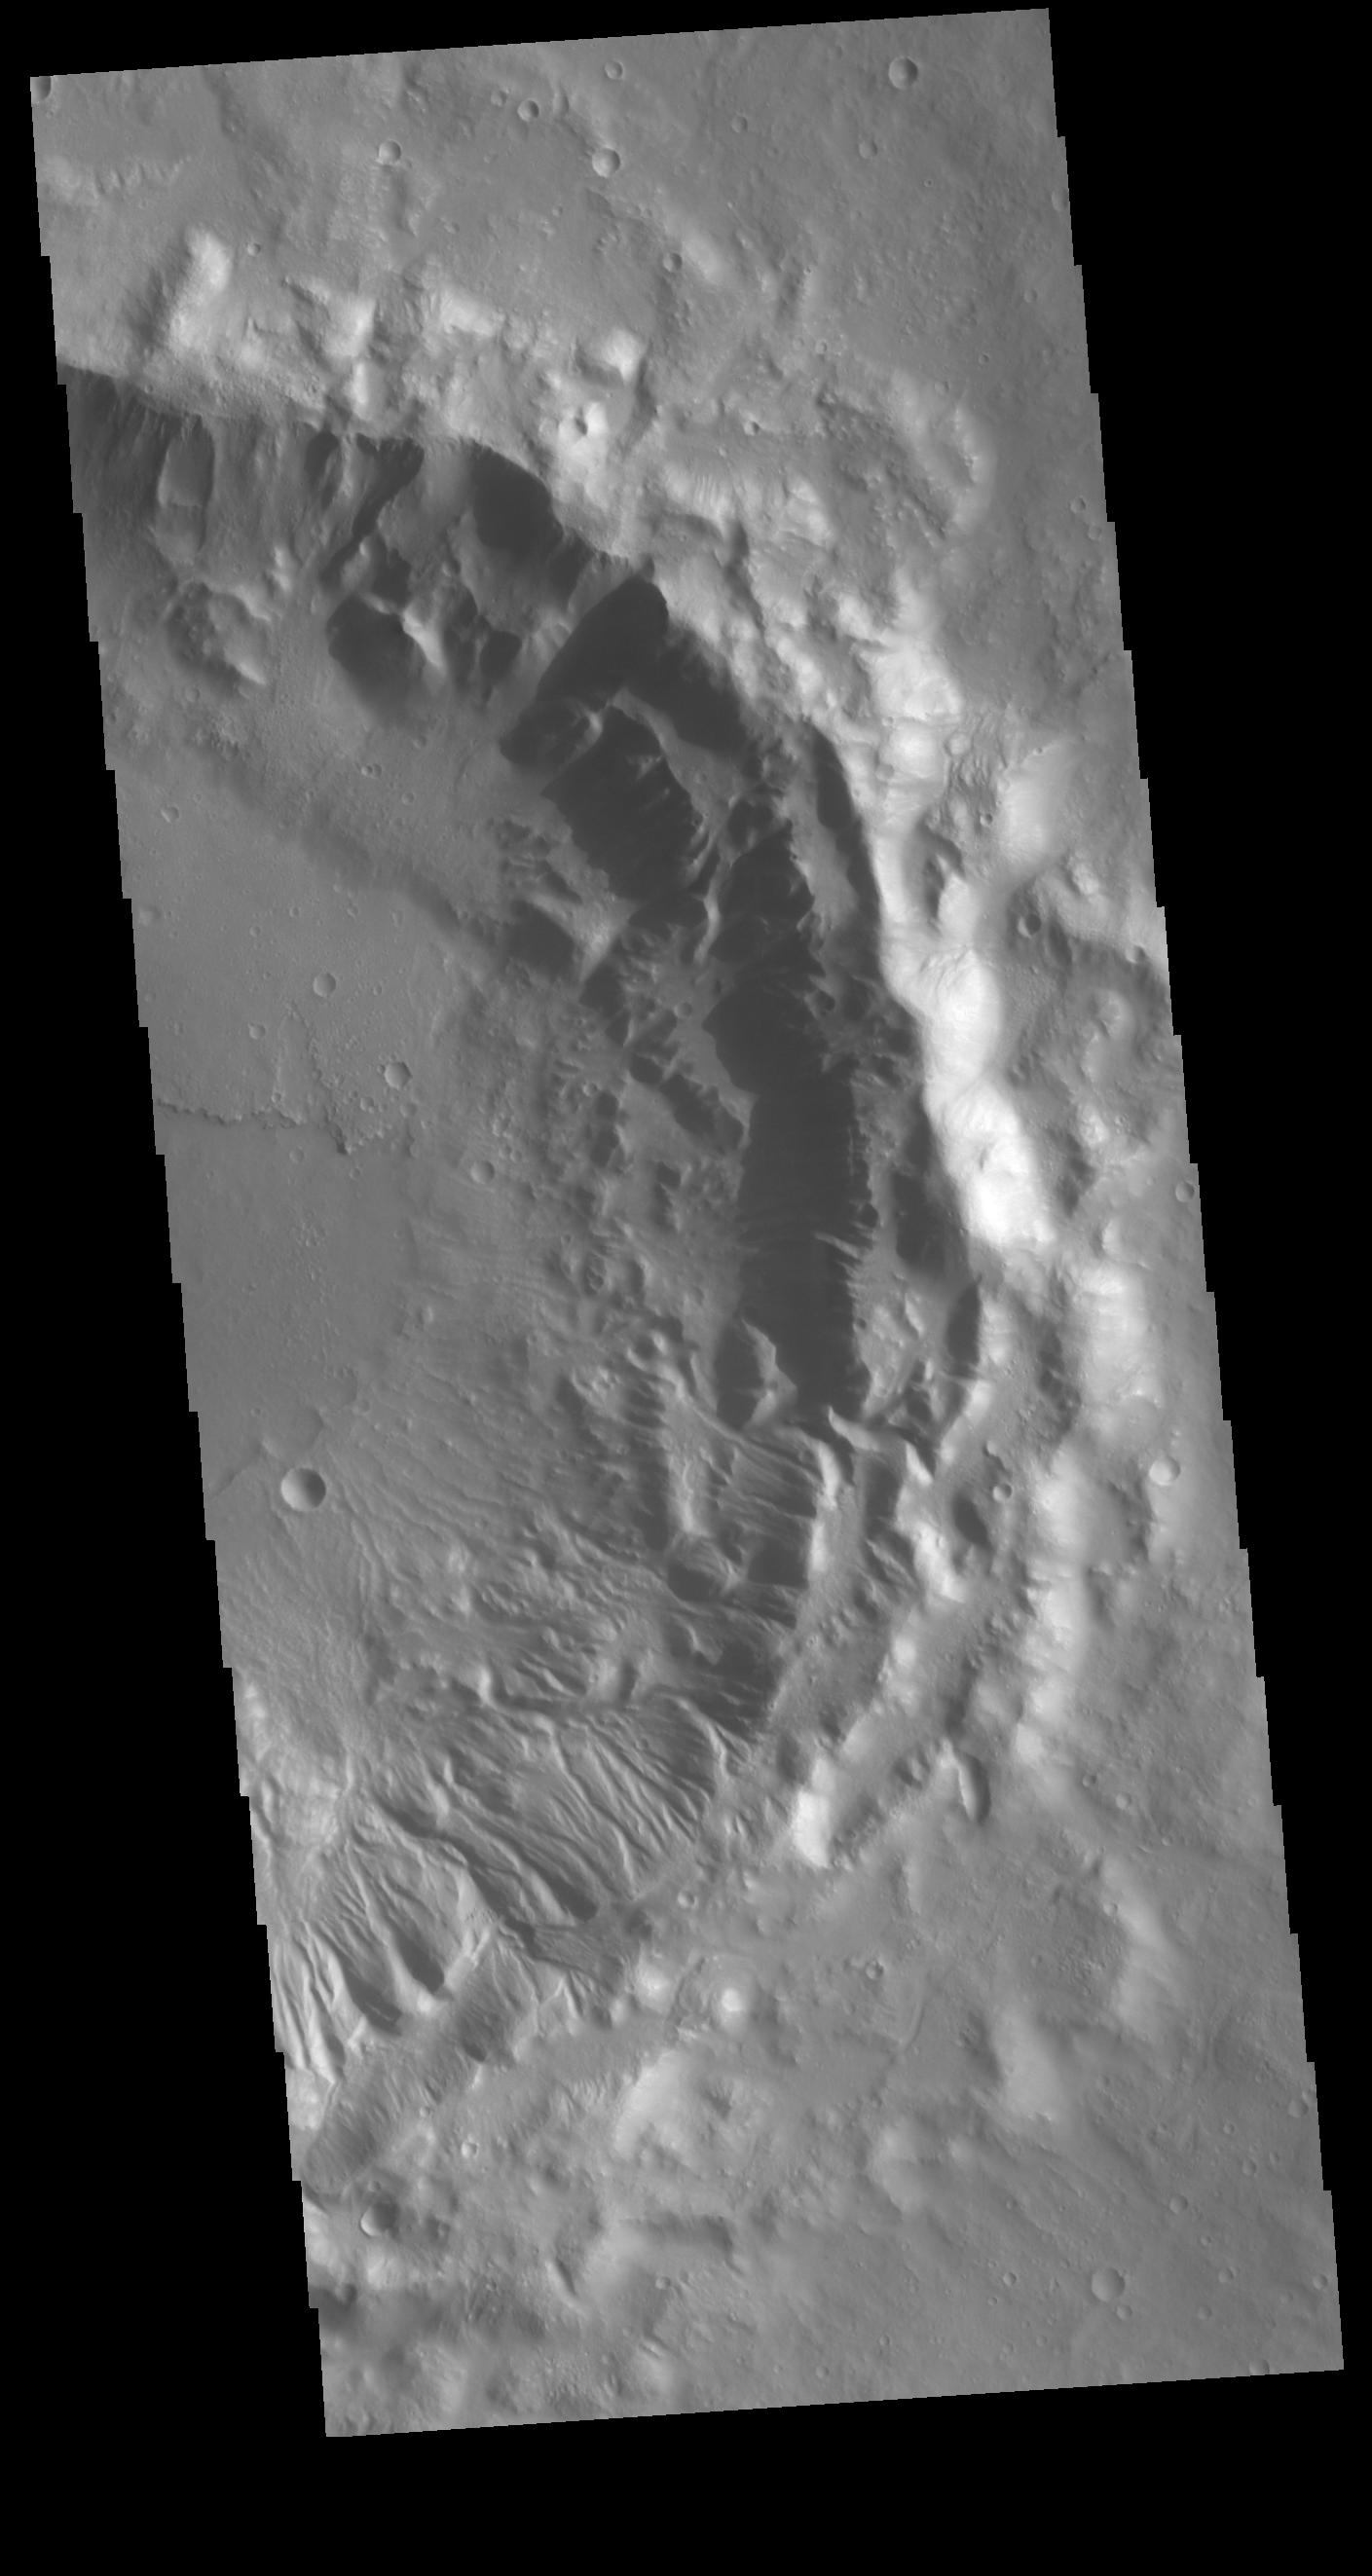 PIA23545: Crater Rim Channels